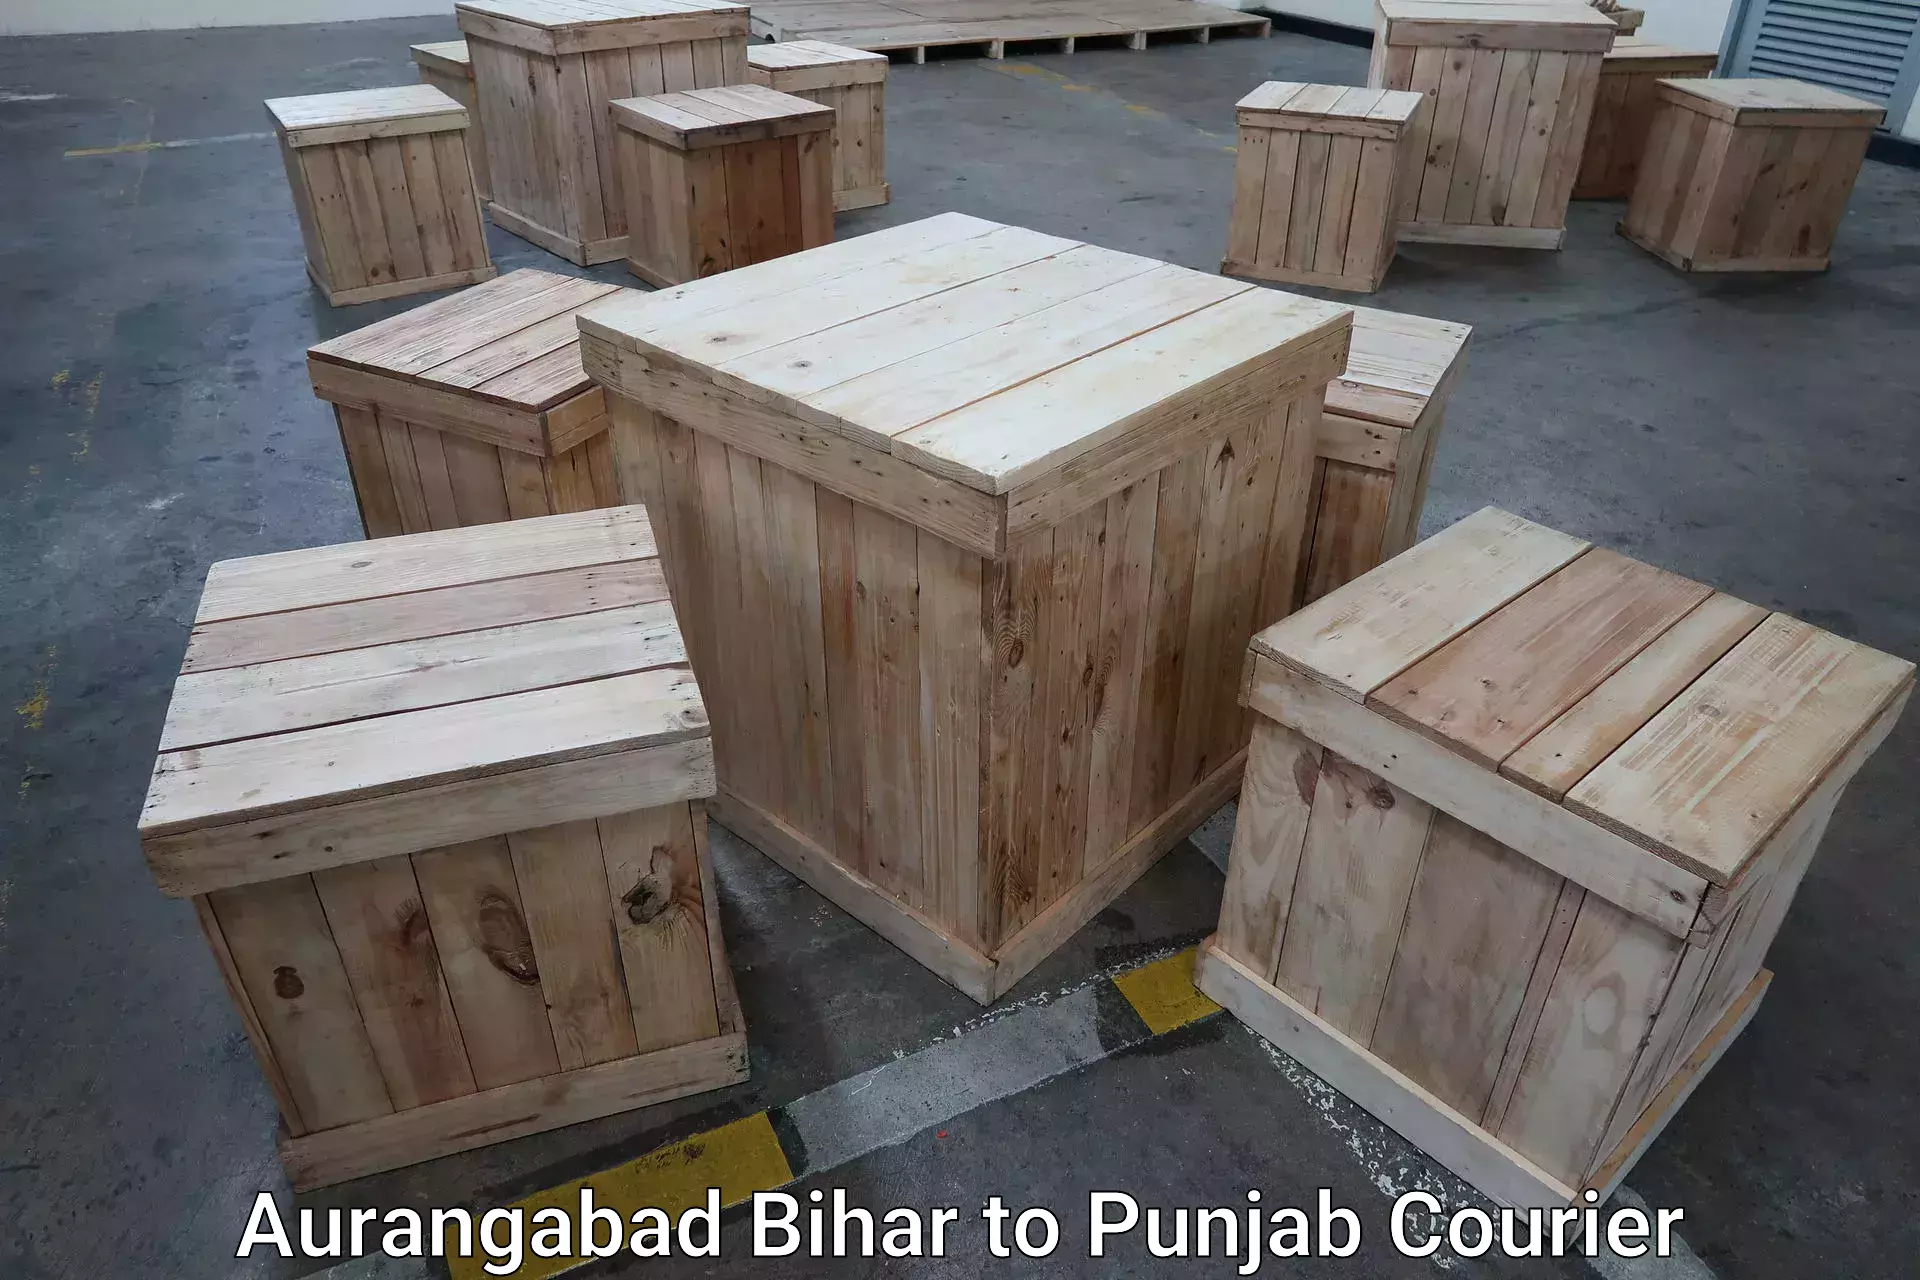 Baggage delivery planning Aurangabad Bihar to Faridkot